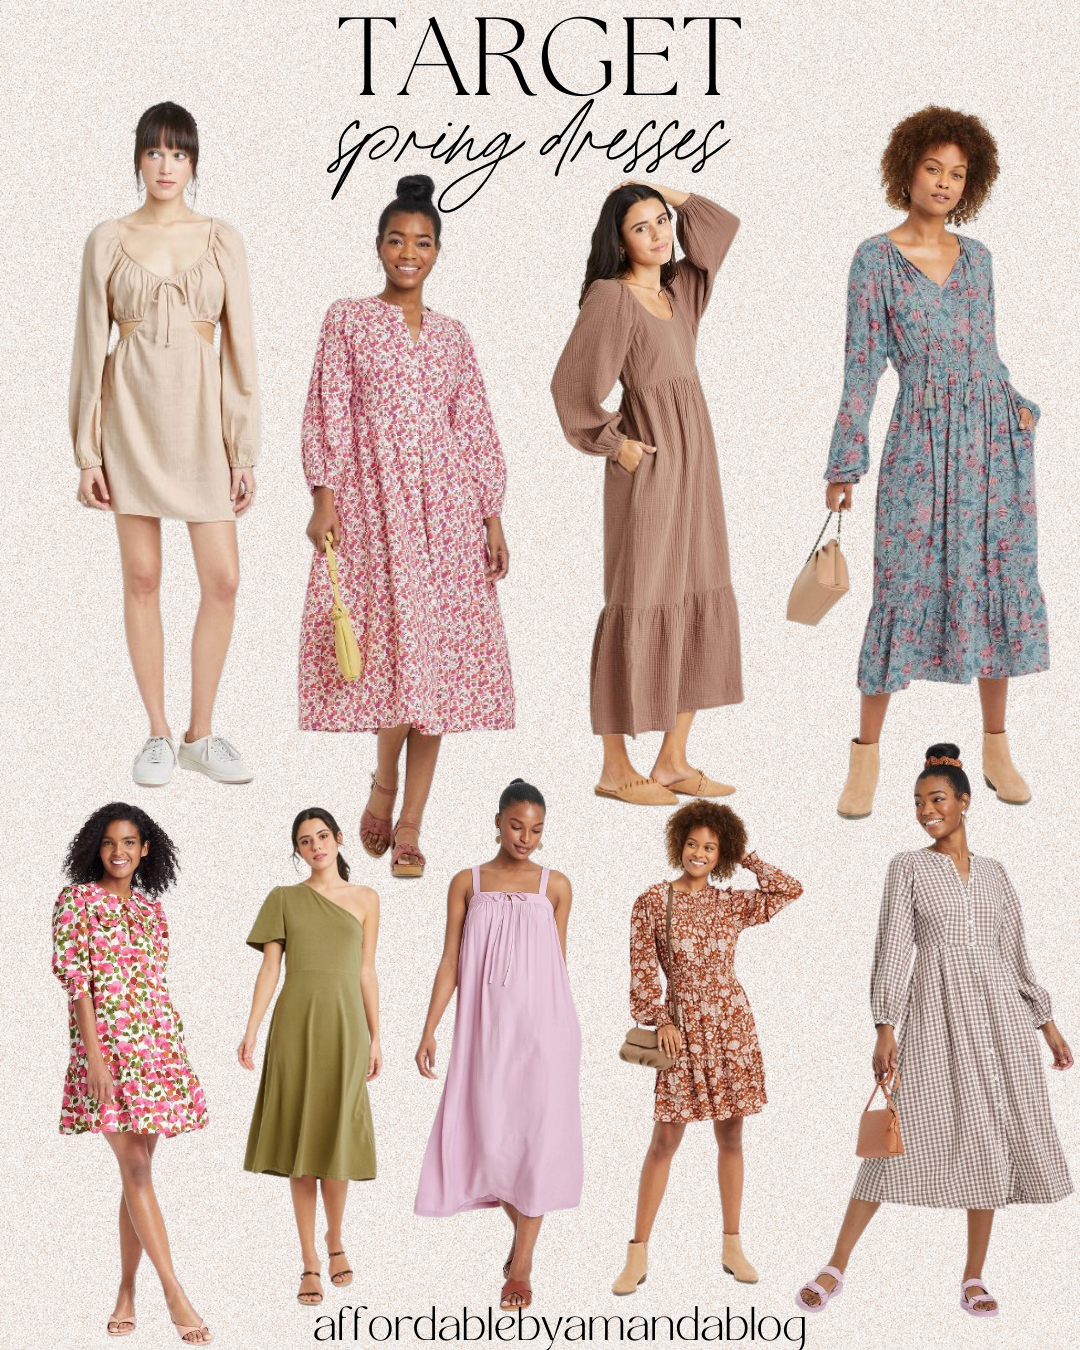 Target Spring Dresses for 2022 | Target New Spring Dresses for Women and Juniors | Spring Casual Dresses at Target | Affordable by Amanda